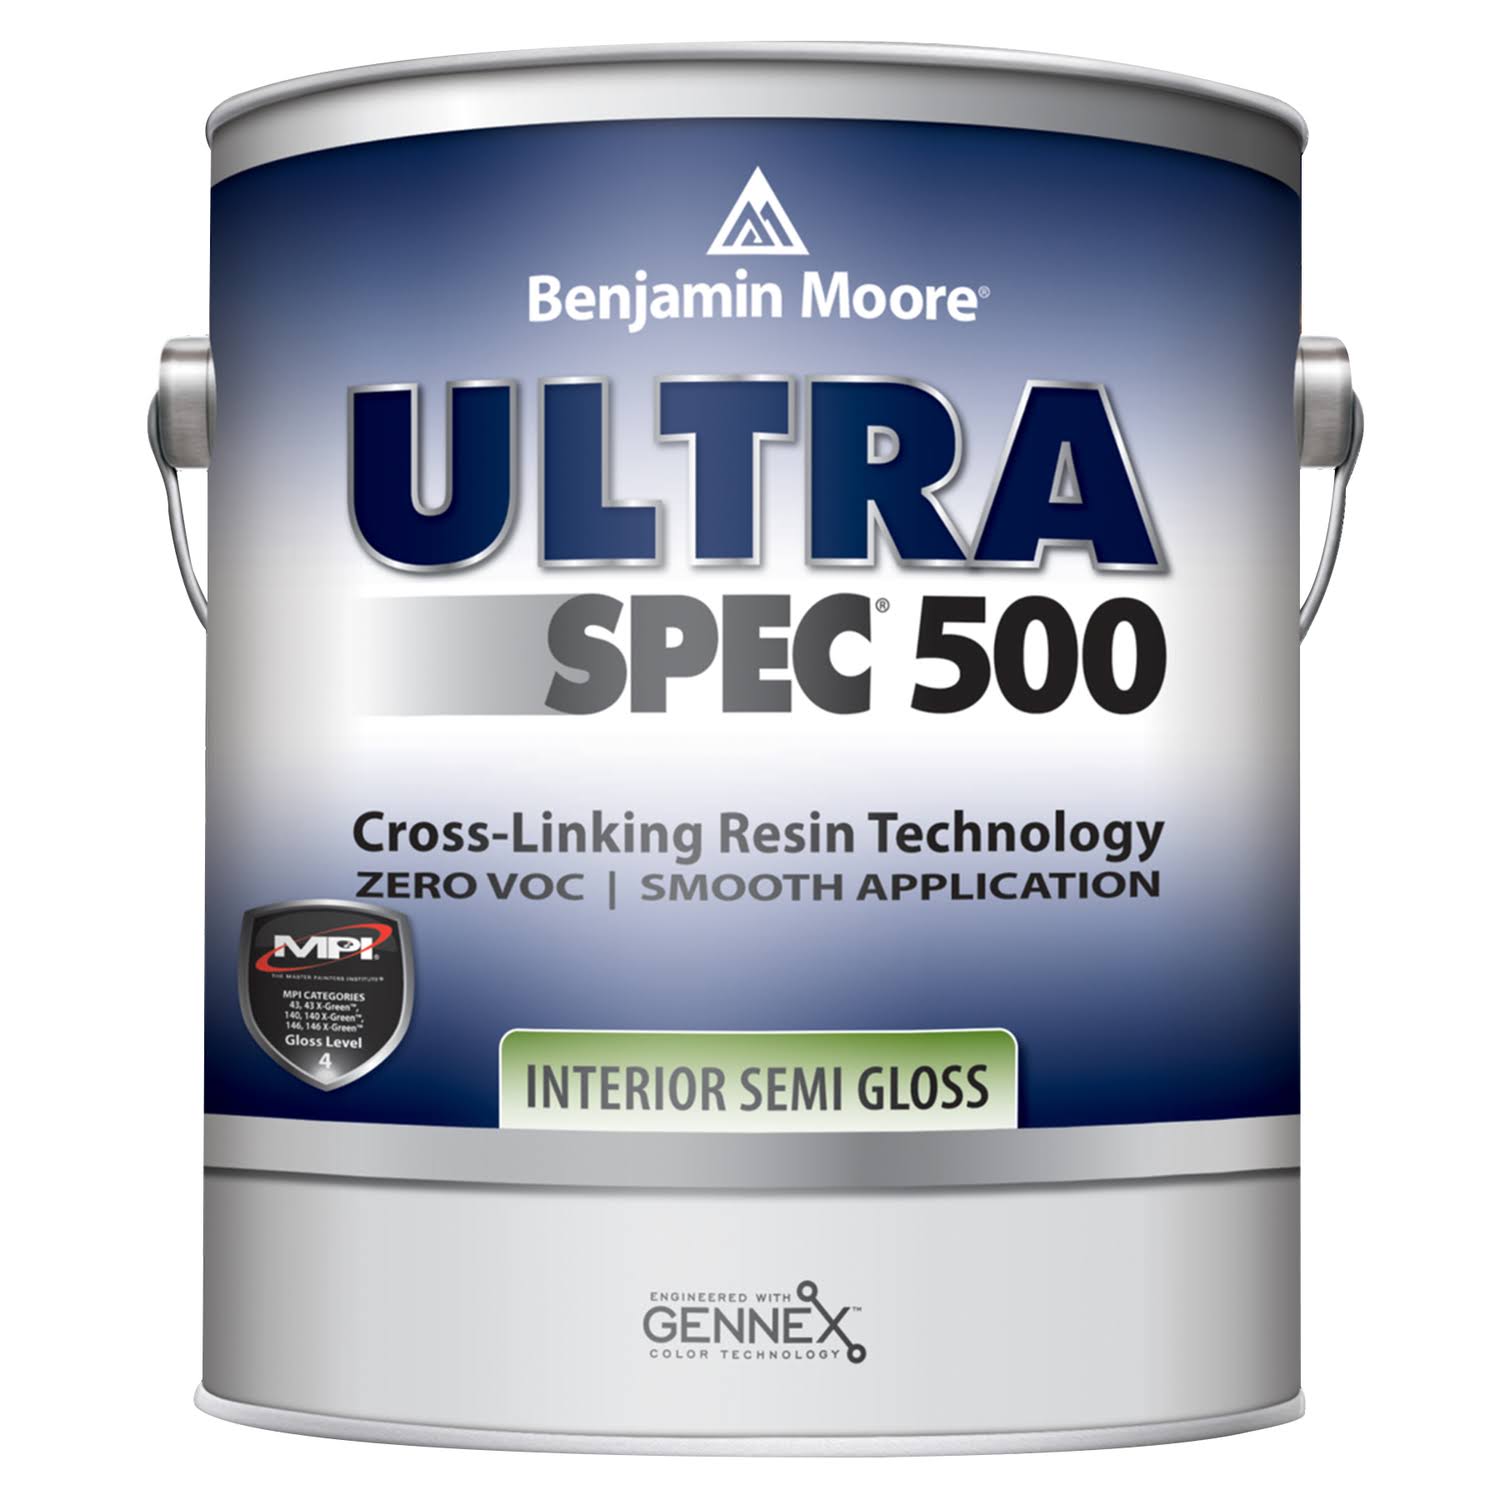 Benjamin Moore Ultra Spec 500 Ceiling Paint - Semi Gloss White, 1gal